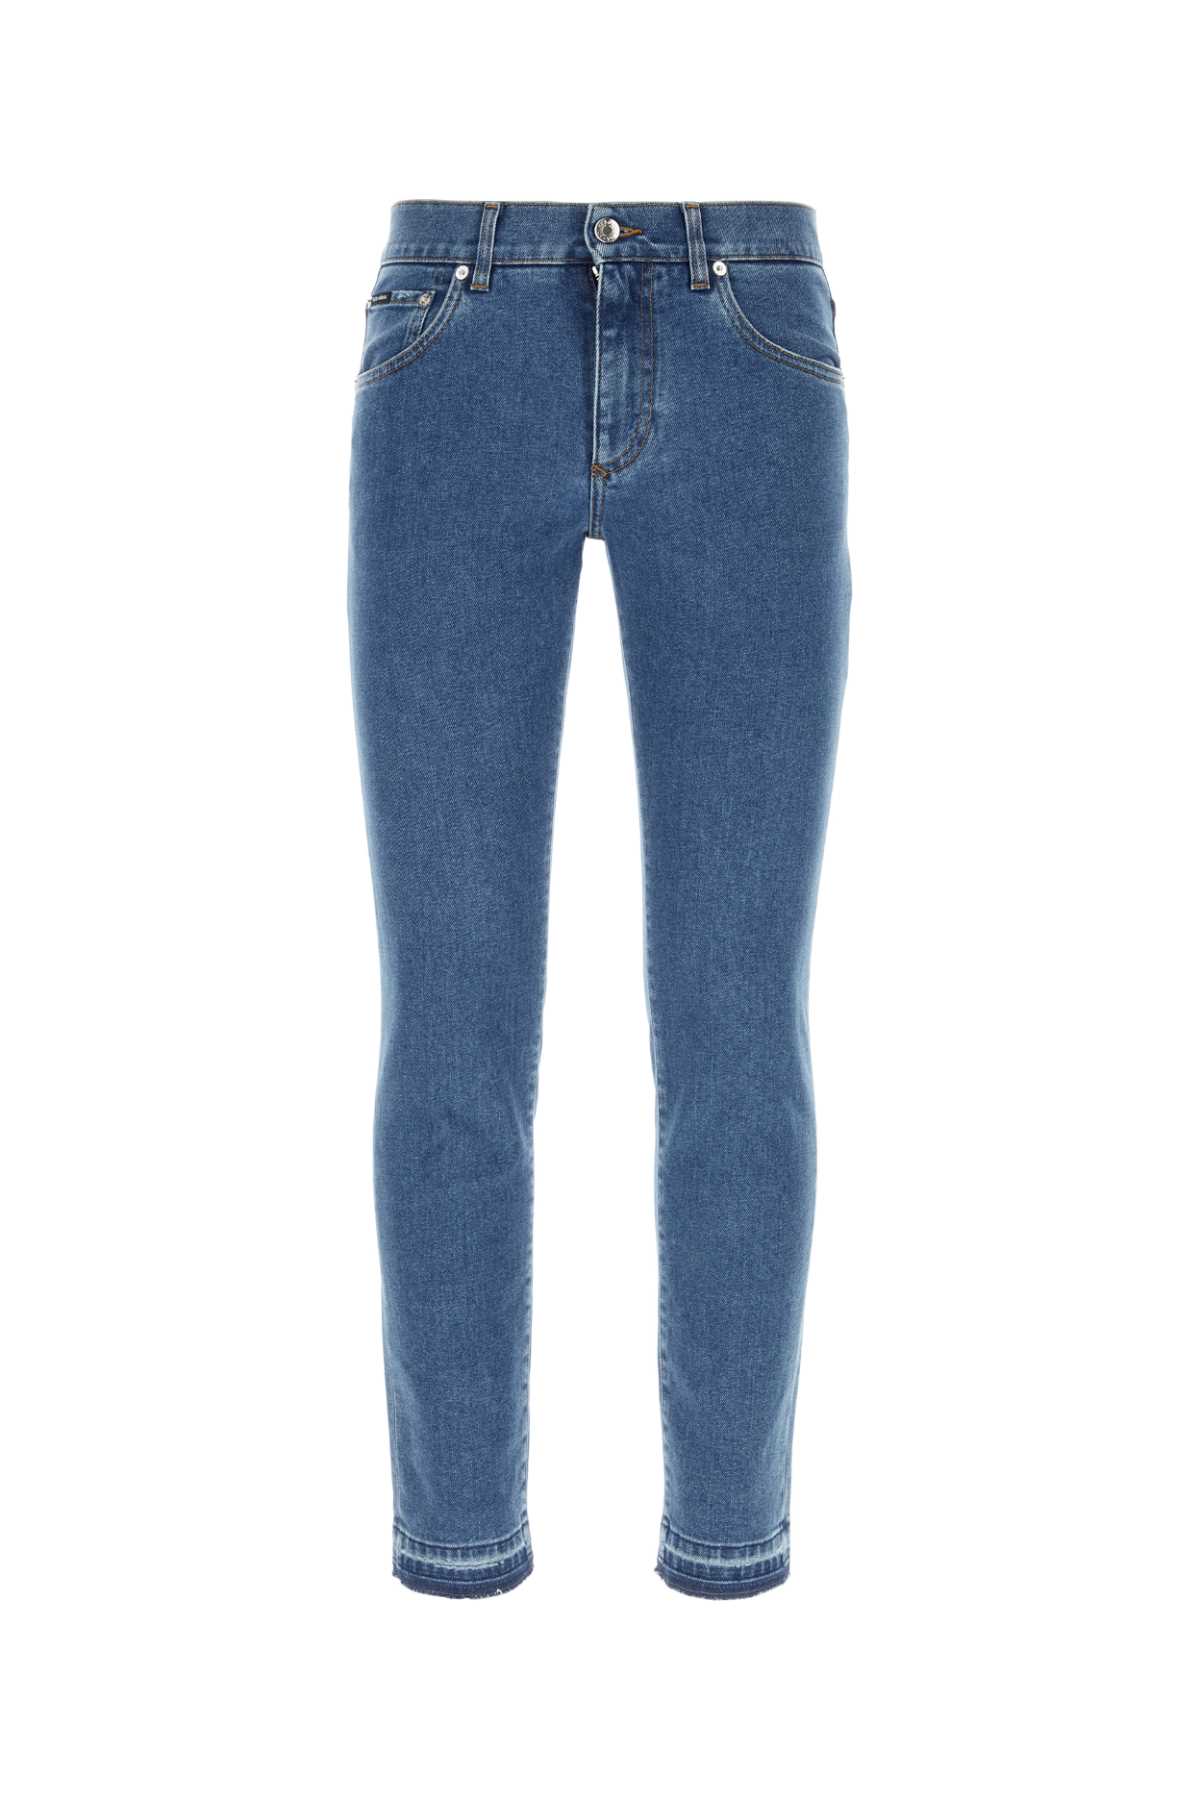 Dolce & Gabbana Stretch Denim Jeans In Varianteabbinata